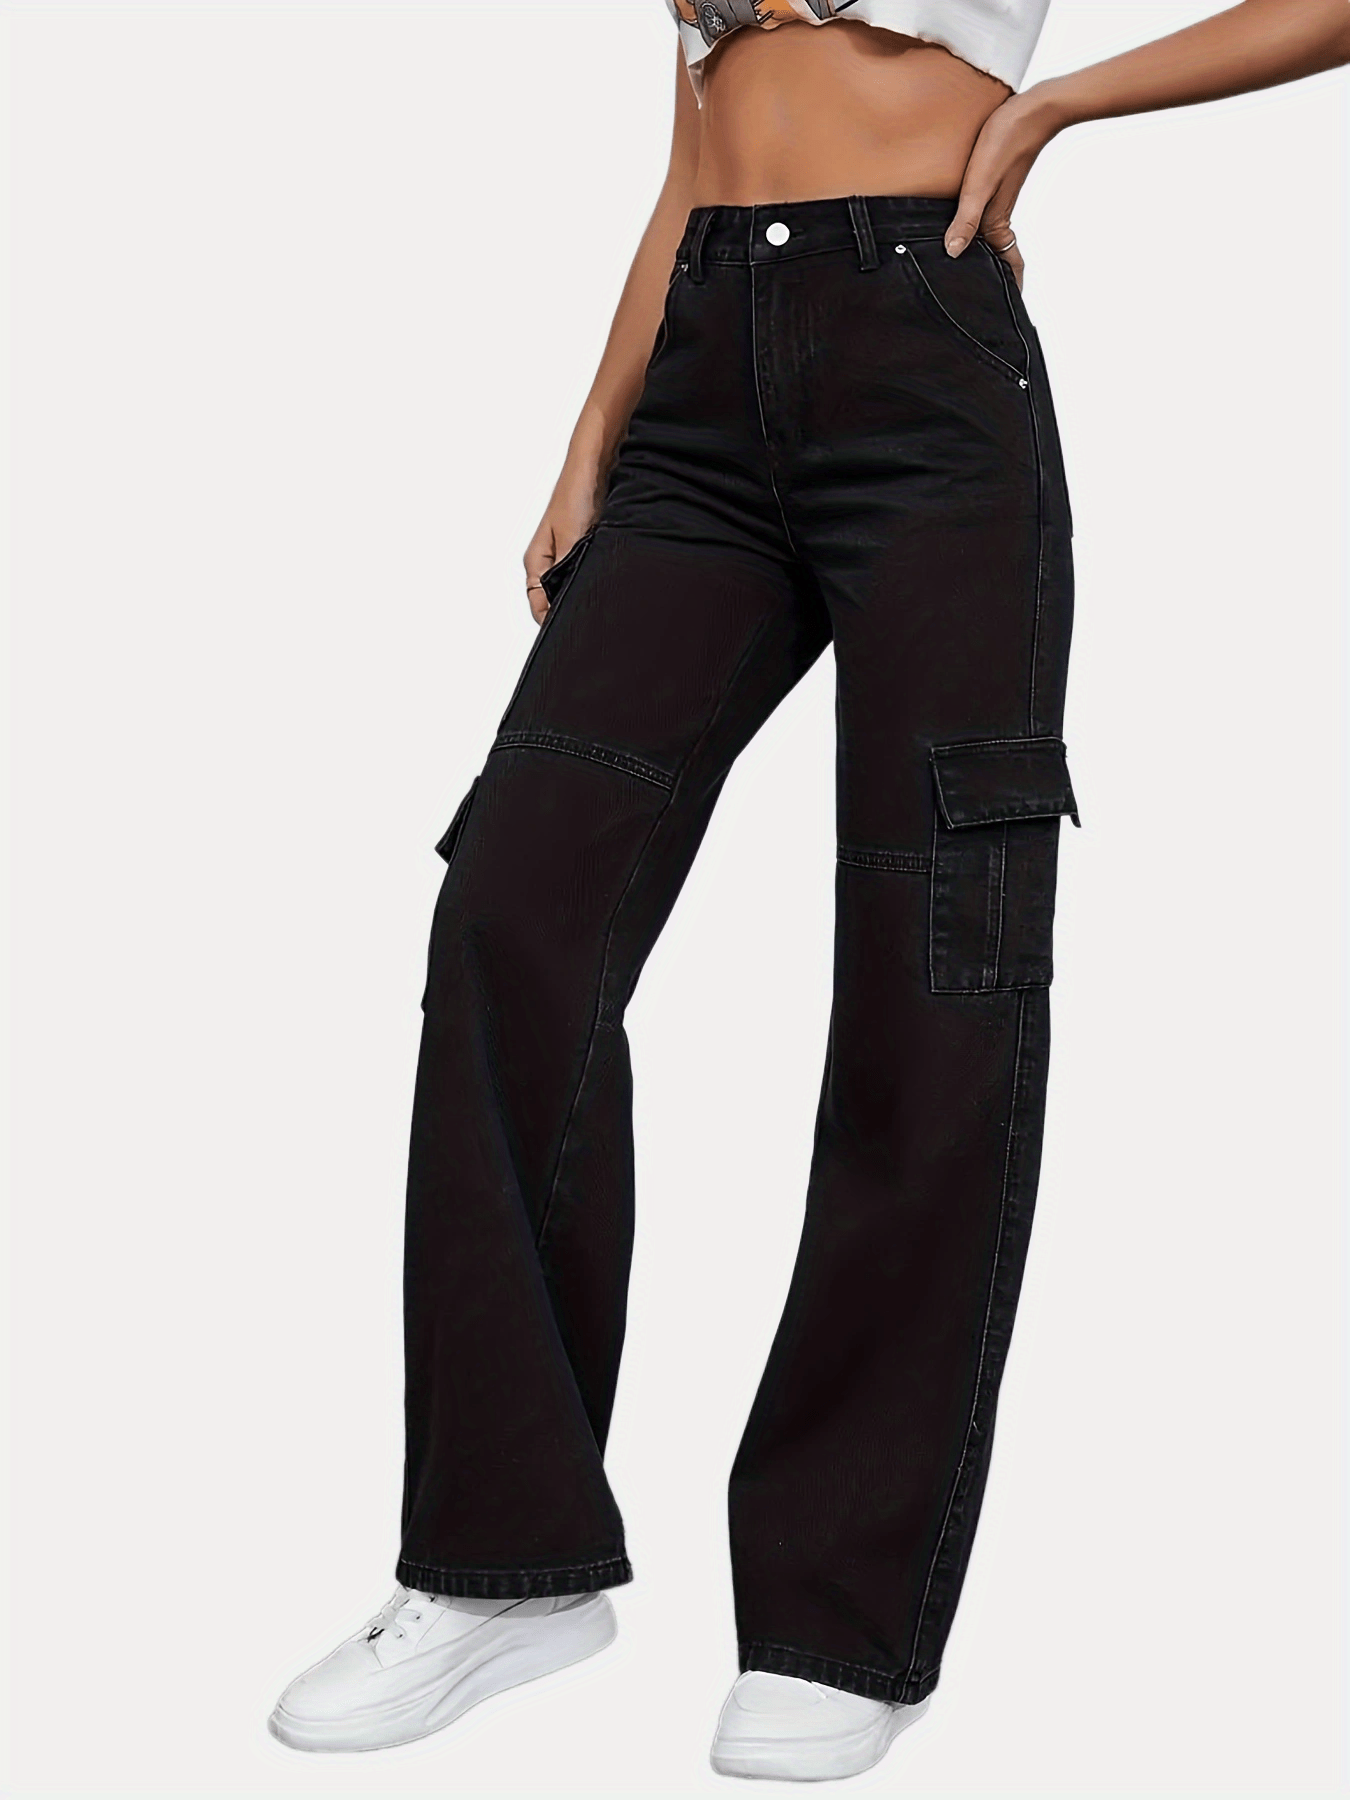 「lovevop」Flap Side Pocket Black High Waist Denim Pants, Cargo Pocket Casual Wide Leg Jeans, Stylish & Trendy, Women's Denim Jeans & Clothing